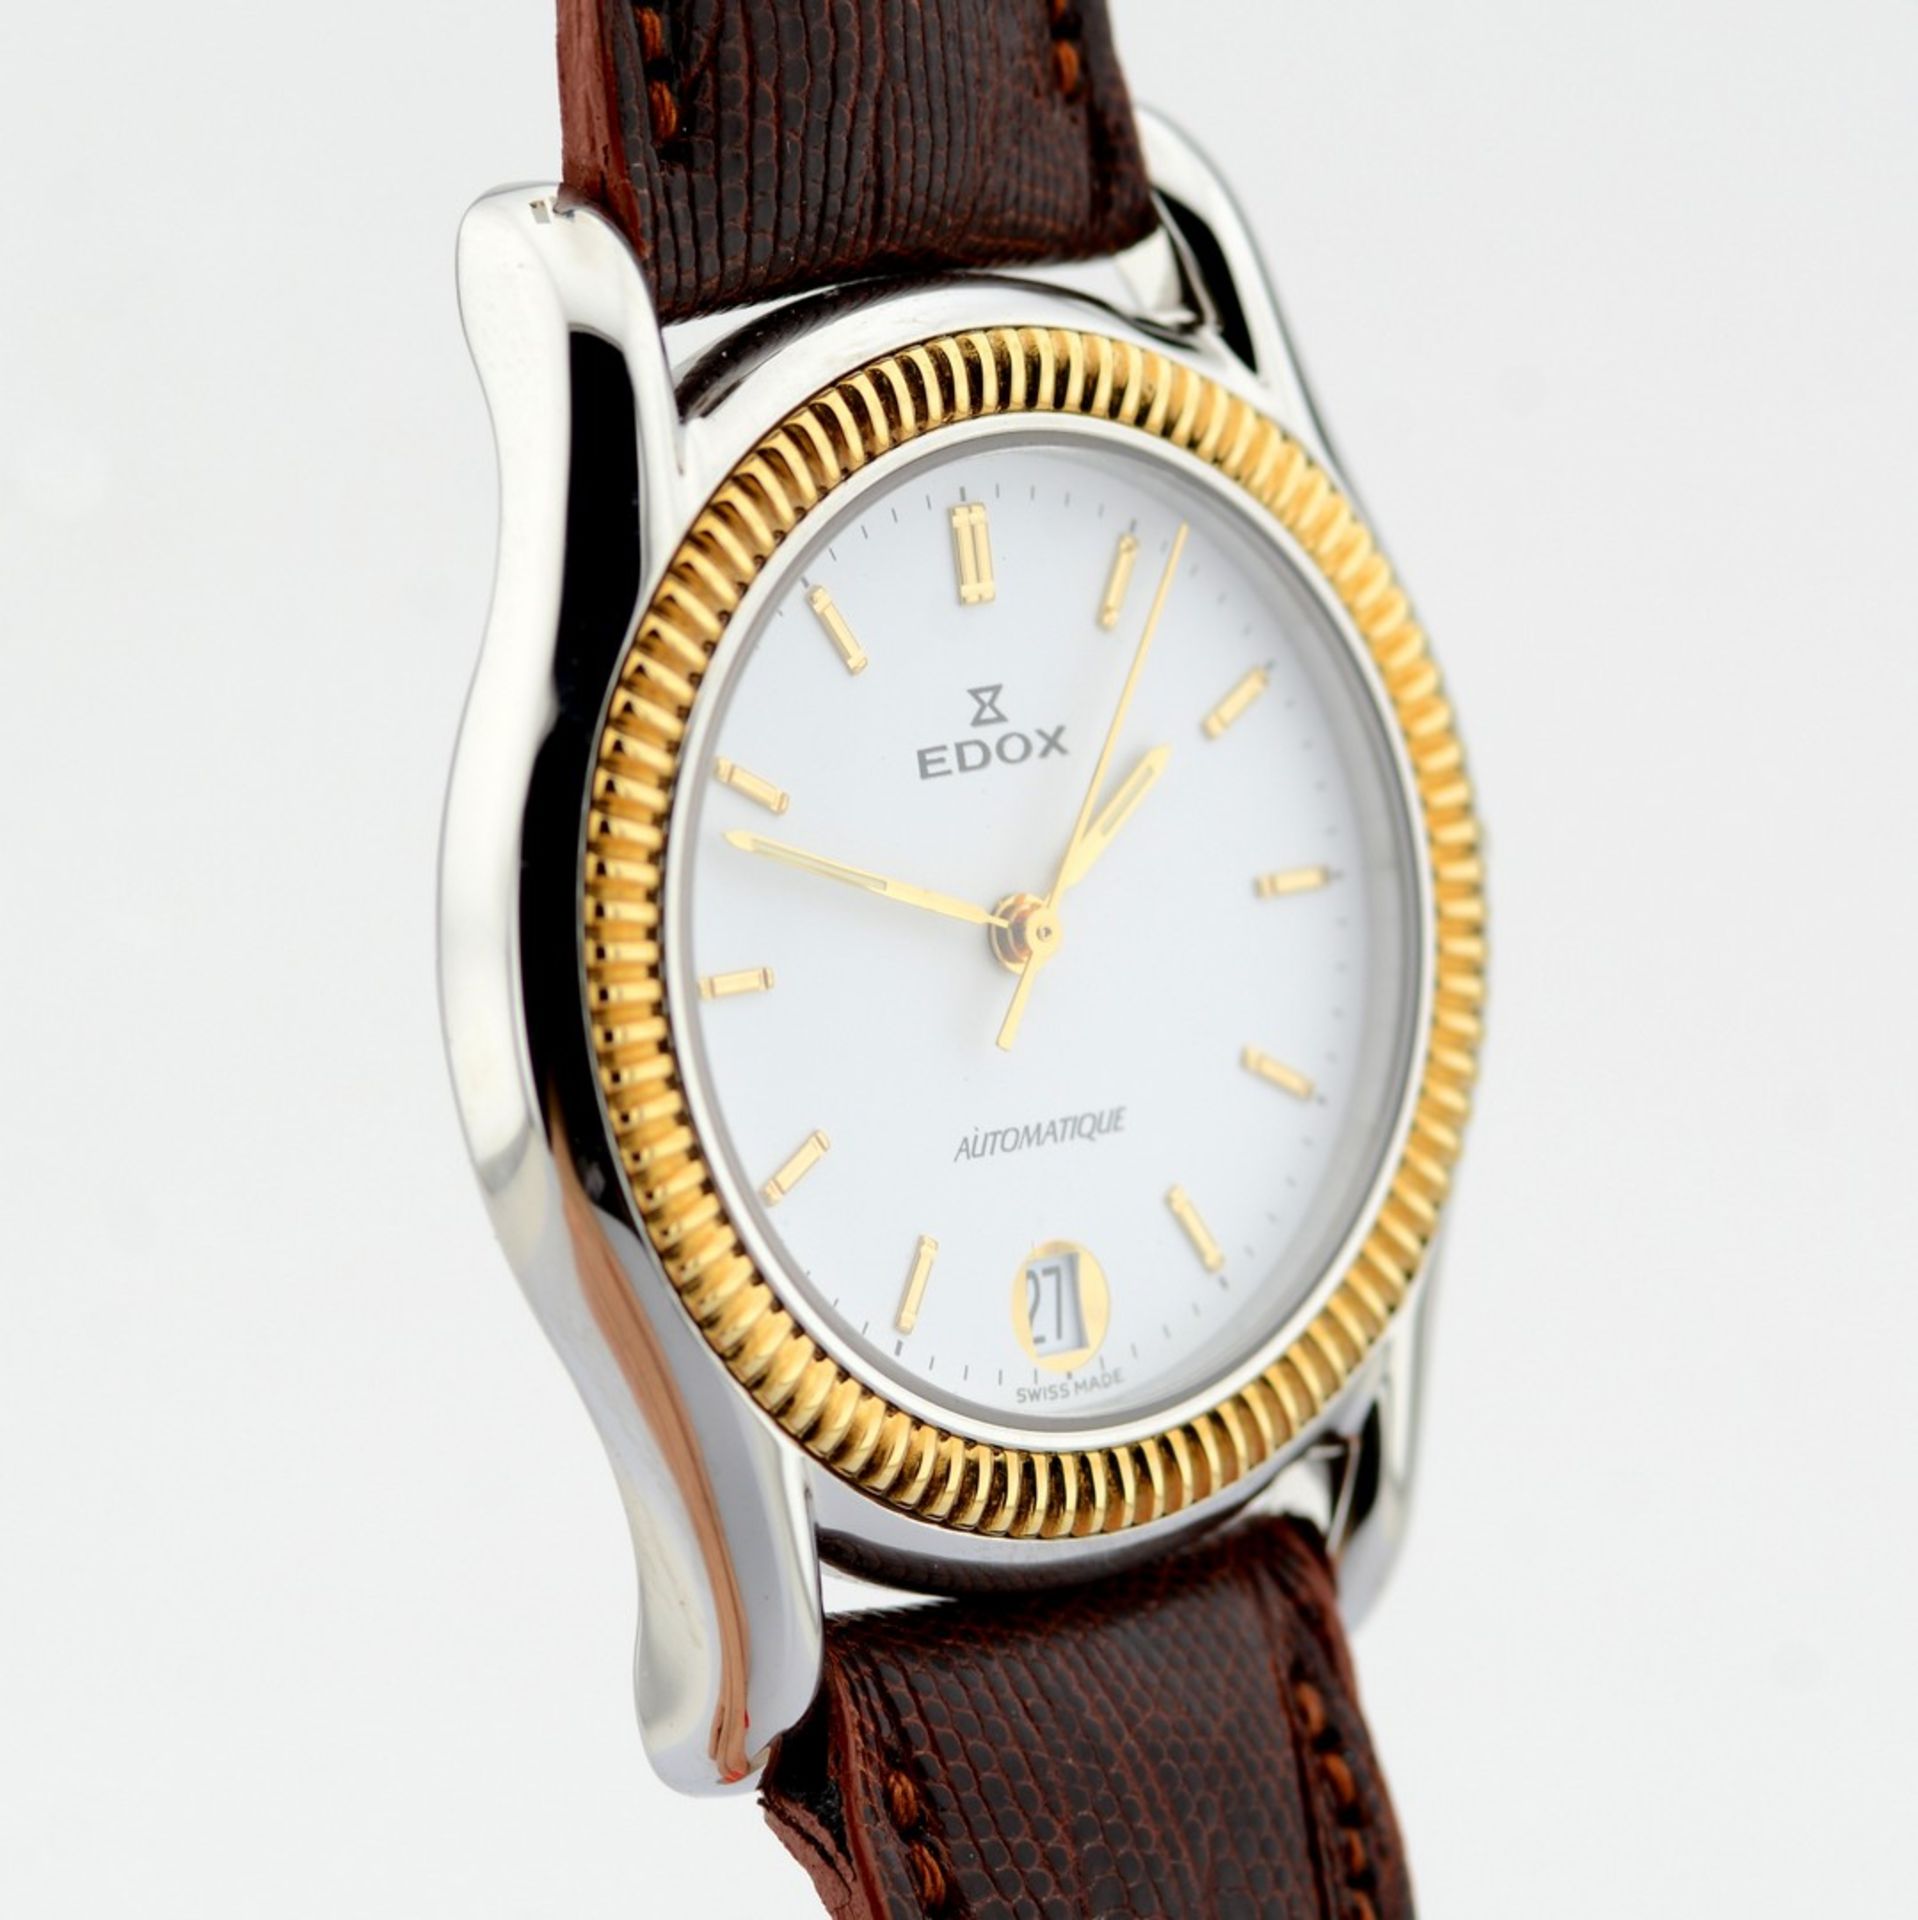 Edox / Automatic Date - Gentlemen's Gold/Steel Wristwatch - Image 2 of 7